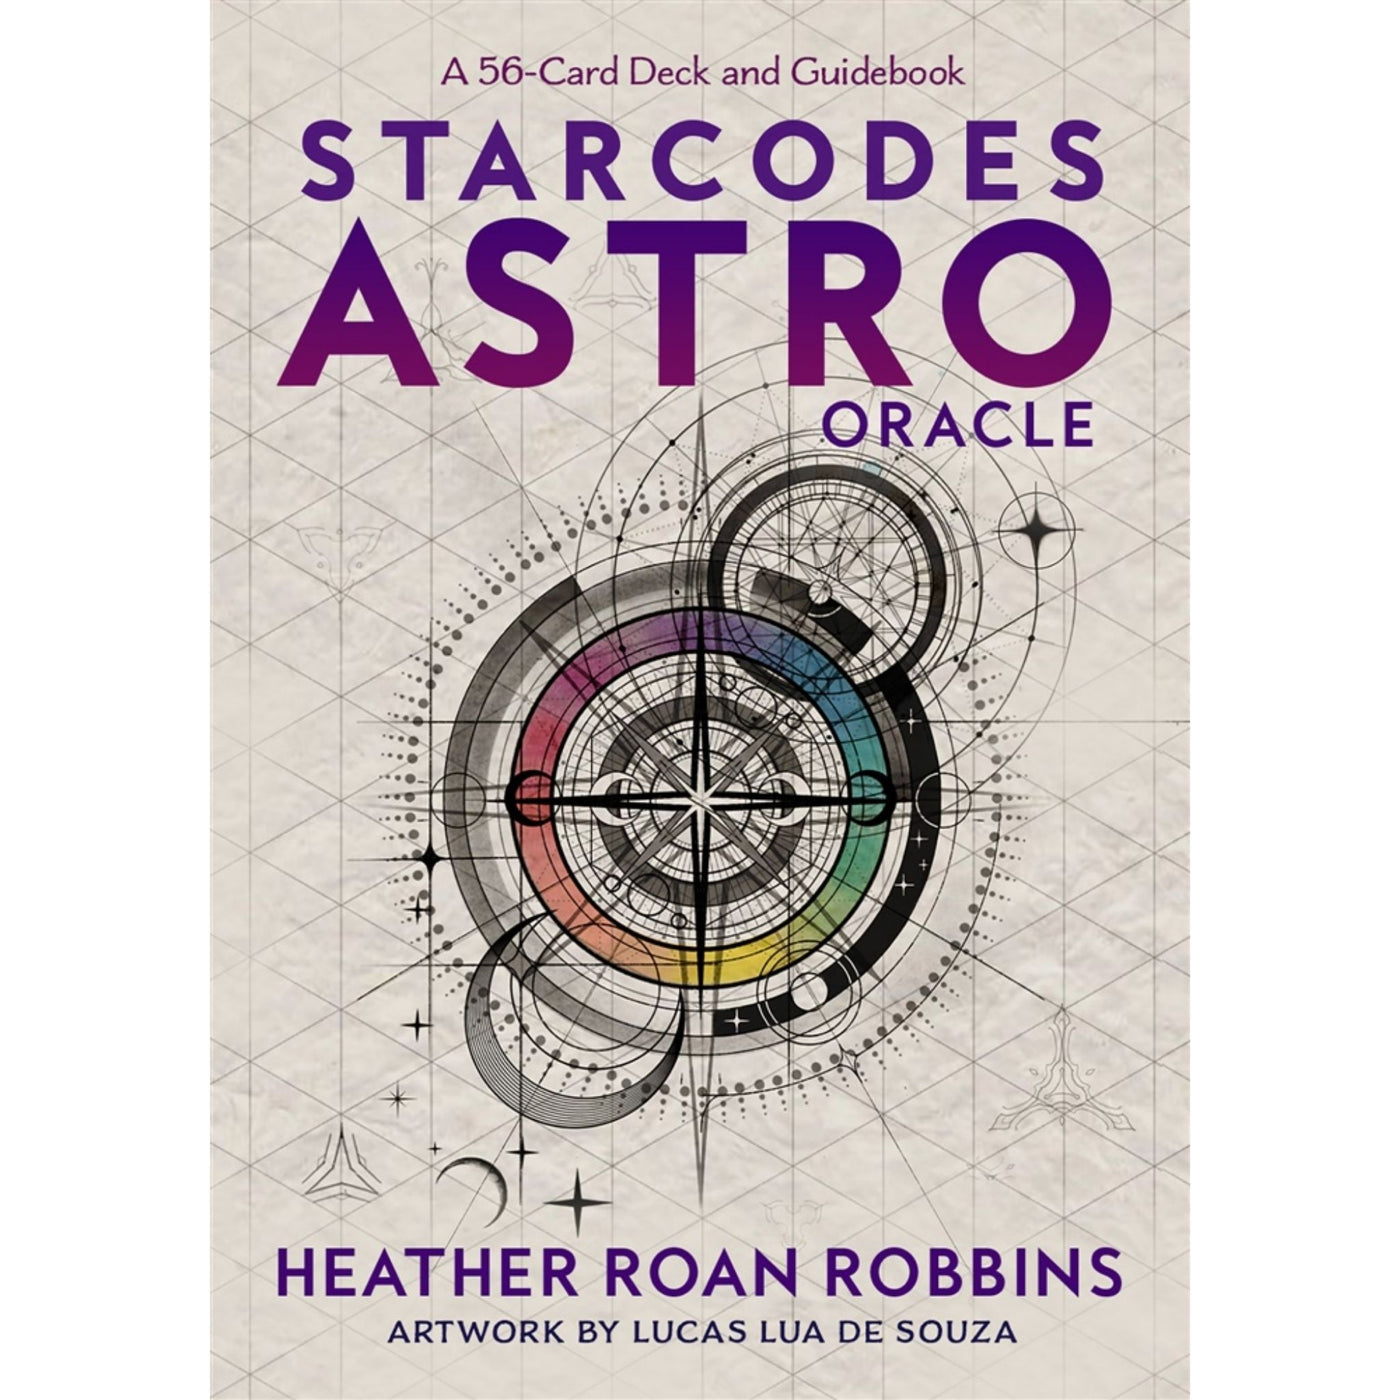 Starcodes astro oracle